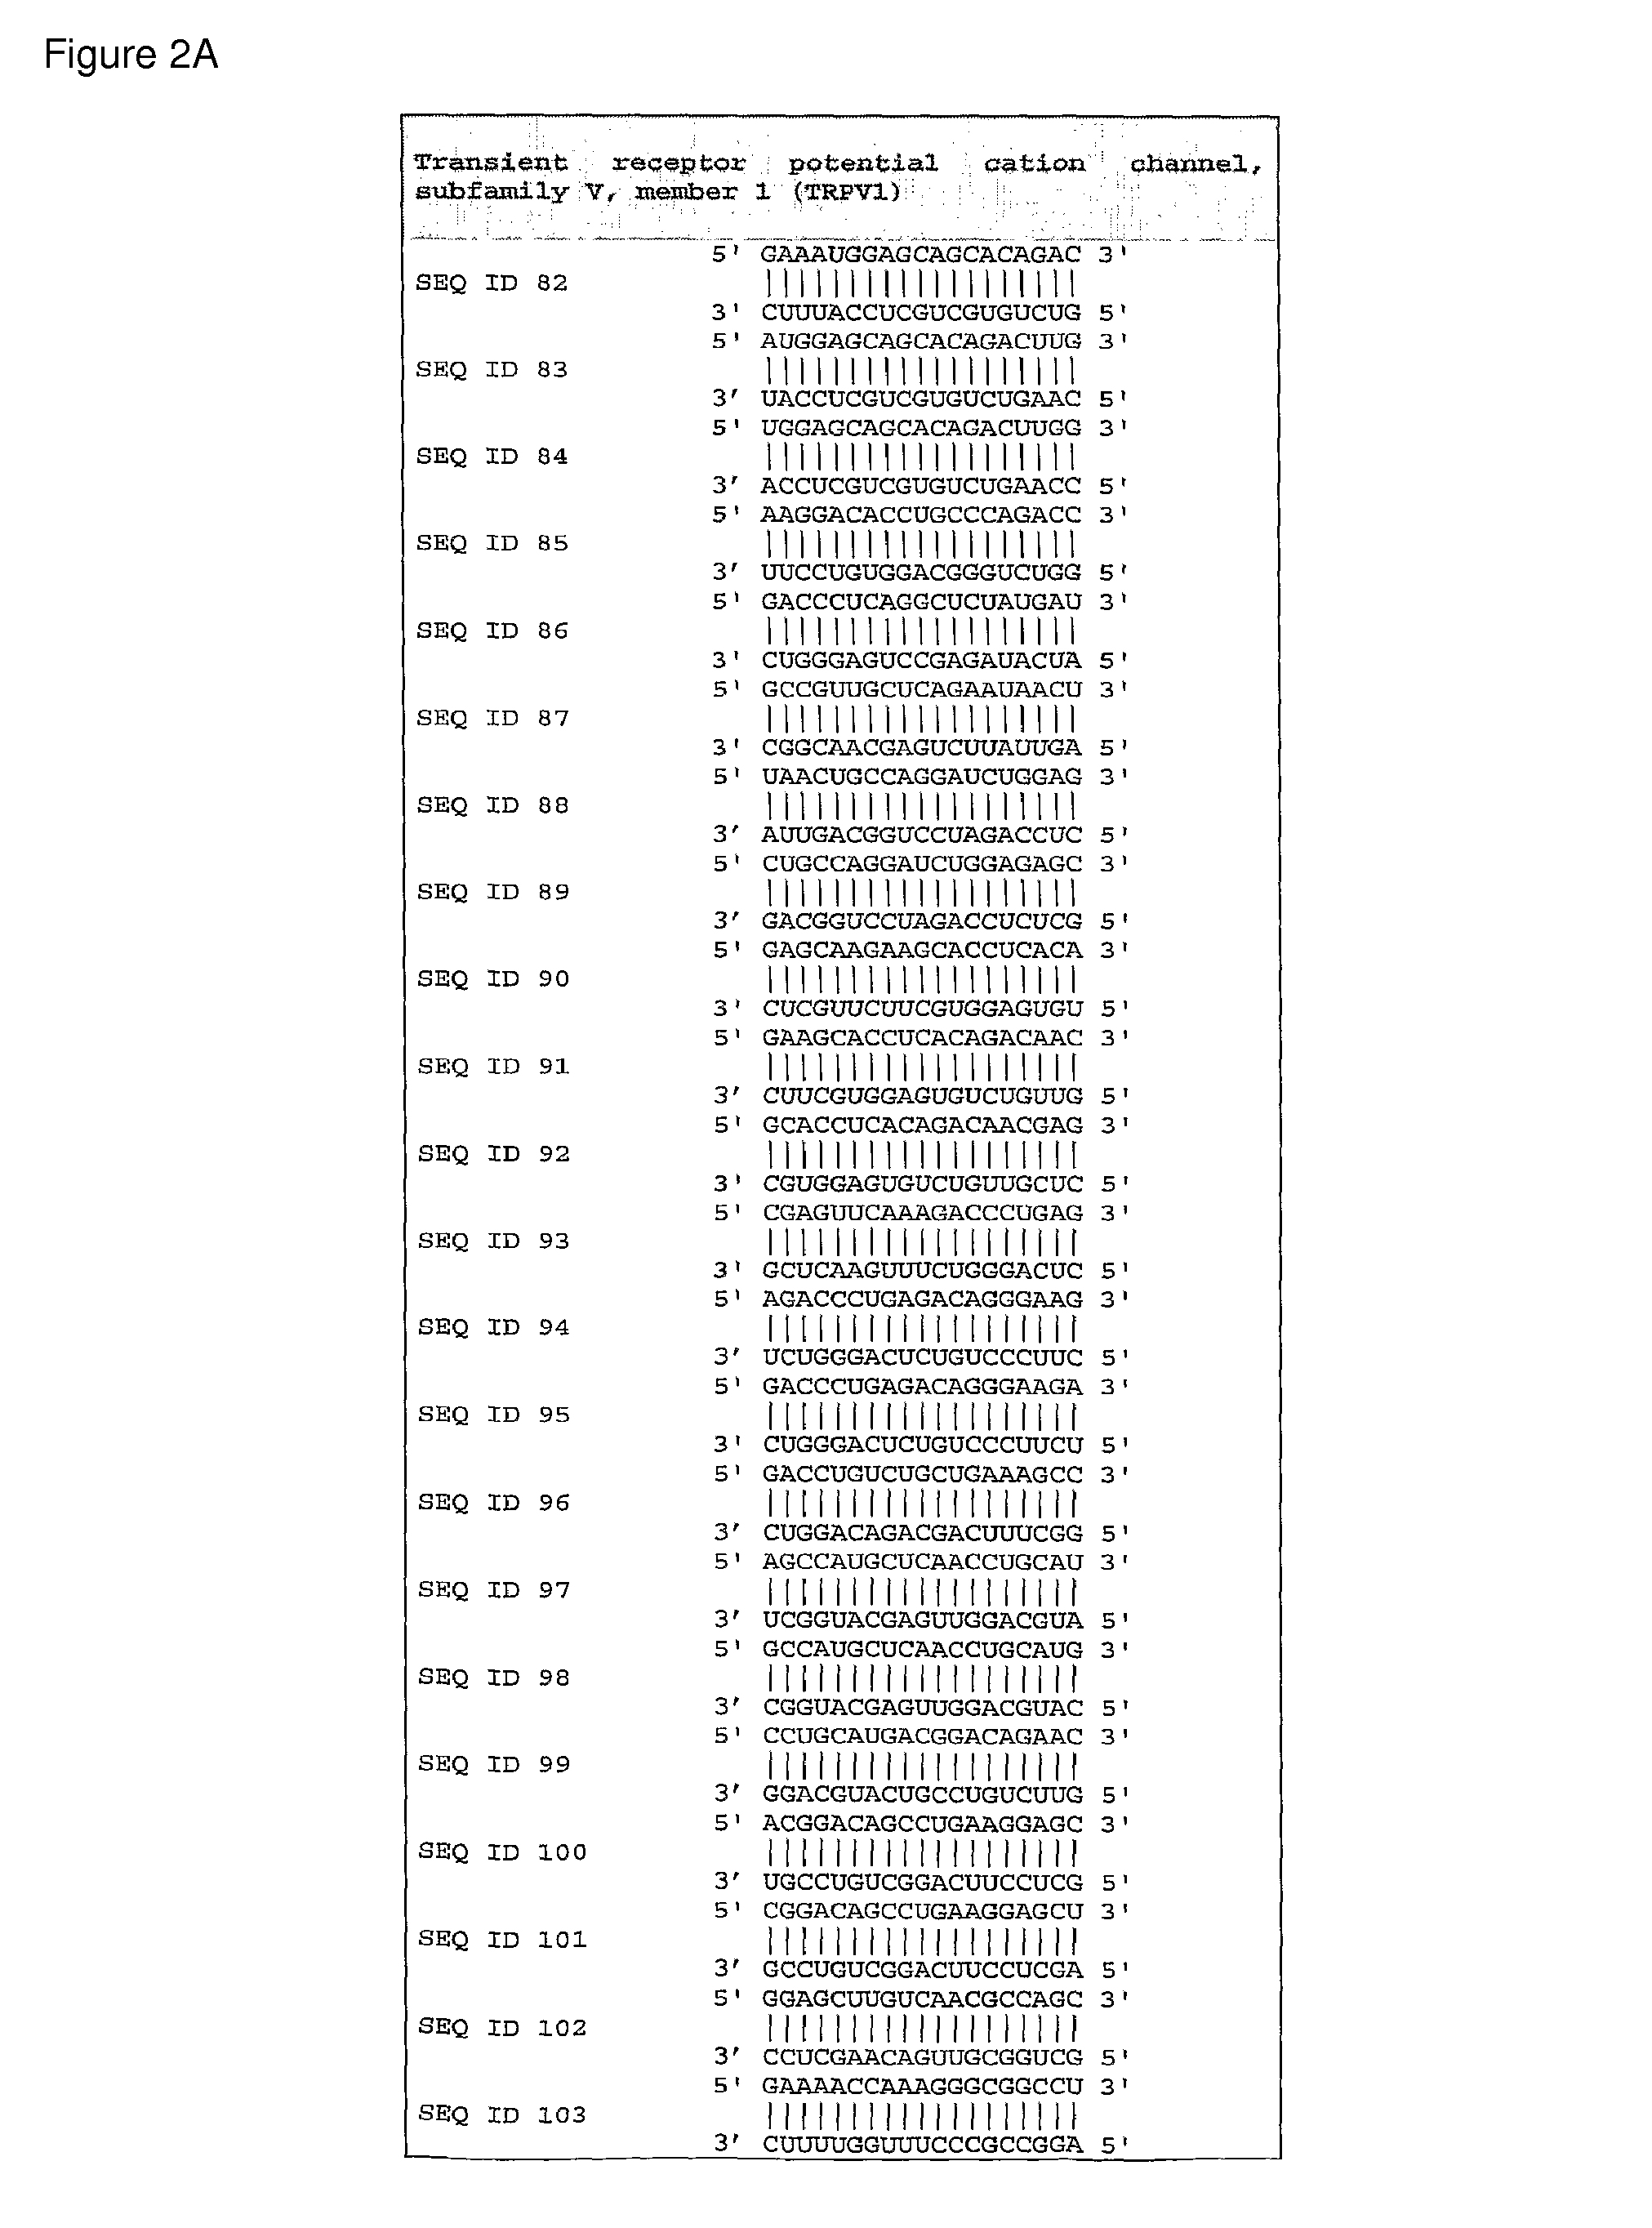 Modulation of TRPV expression levels